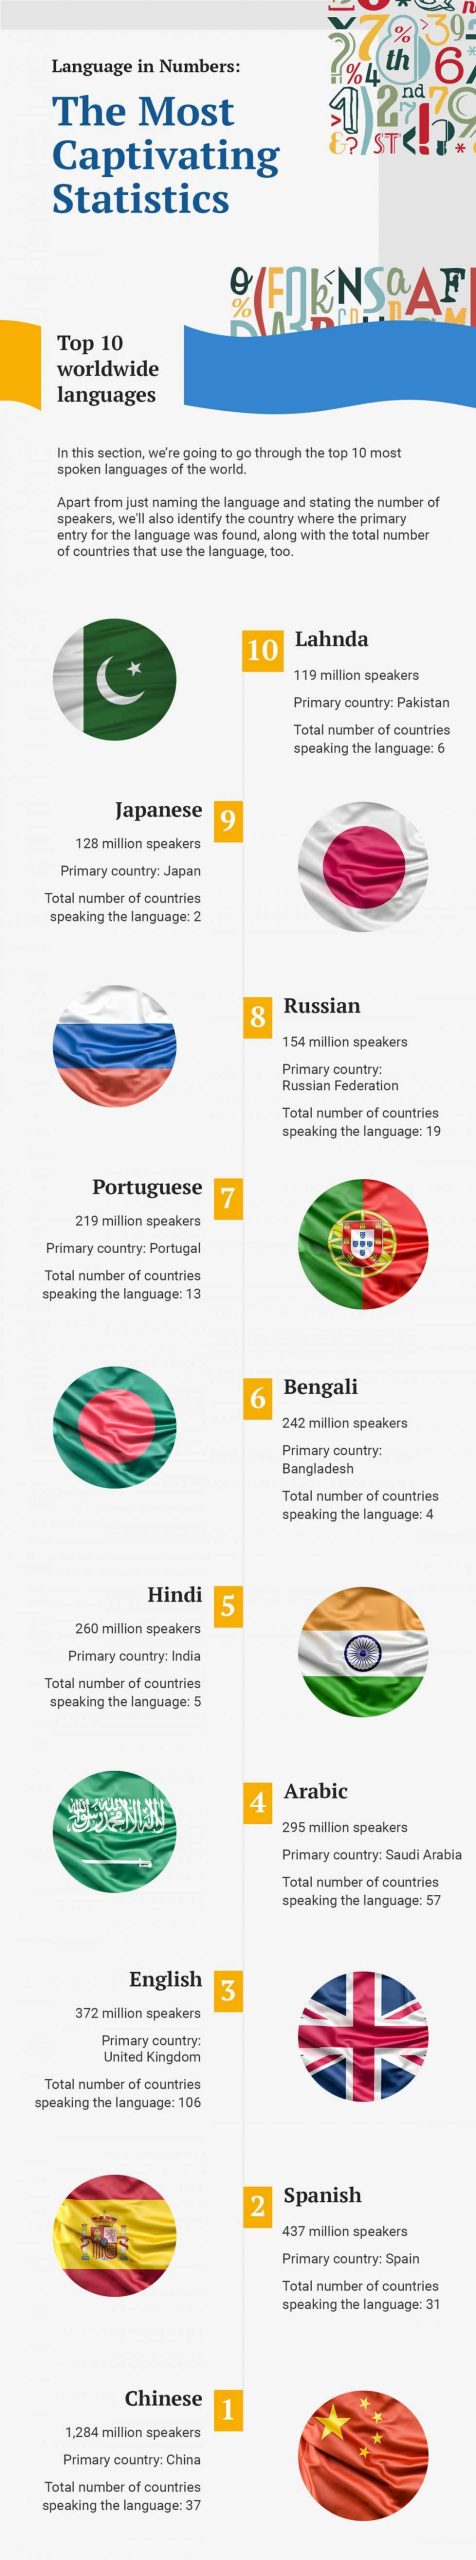 Top 10 Worldwide languages